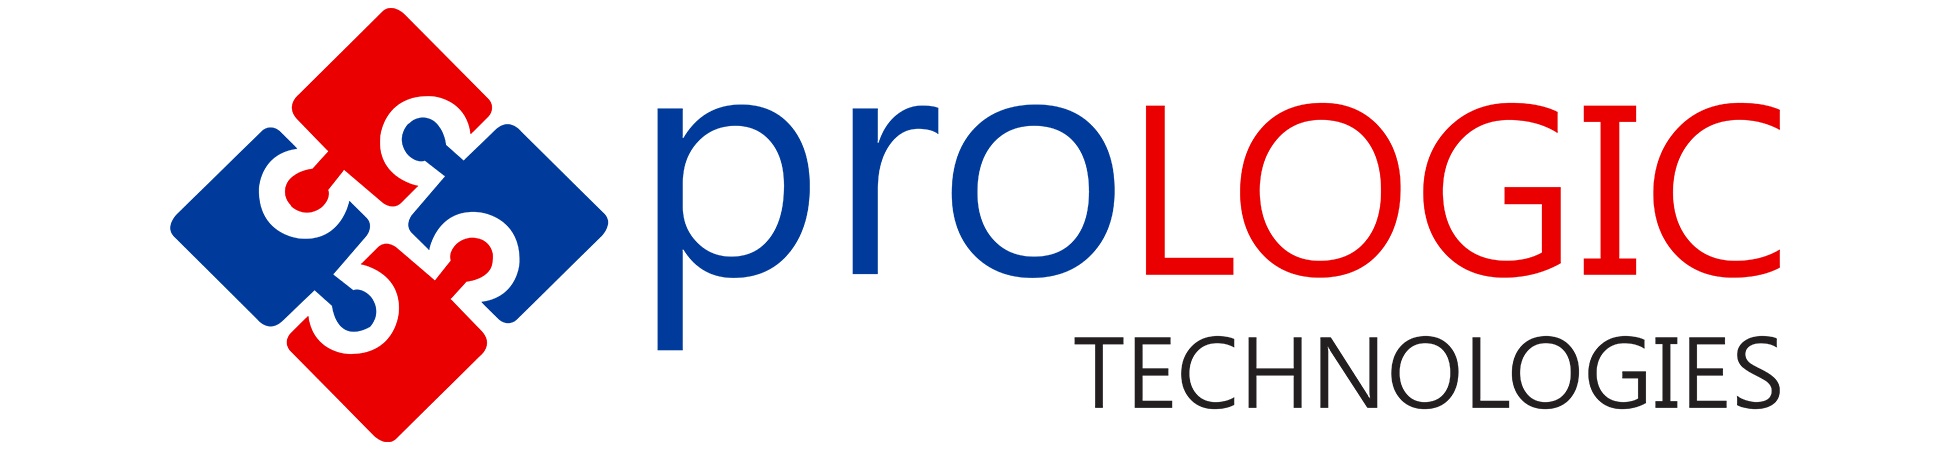 Prologic Technologies cover